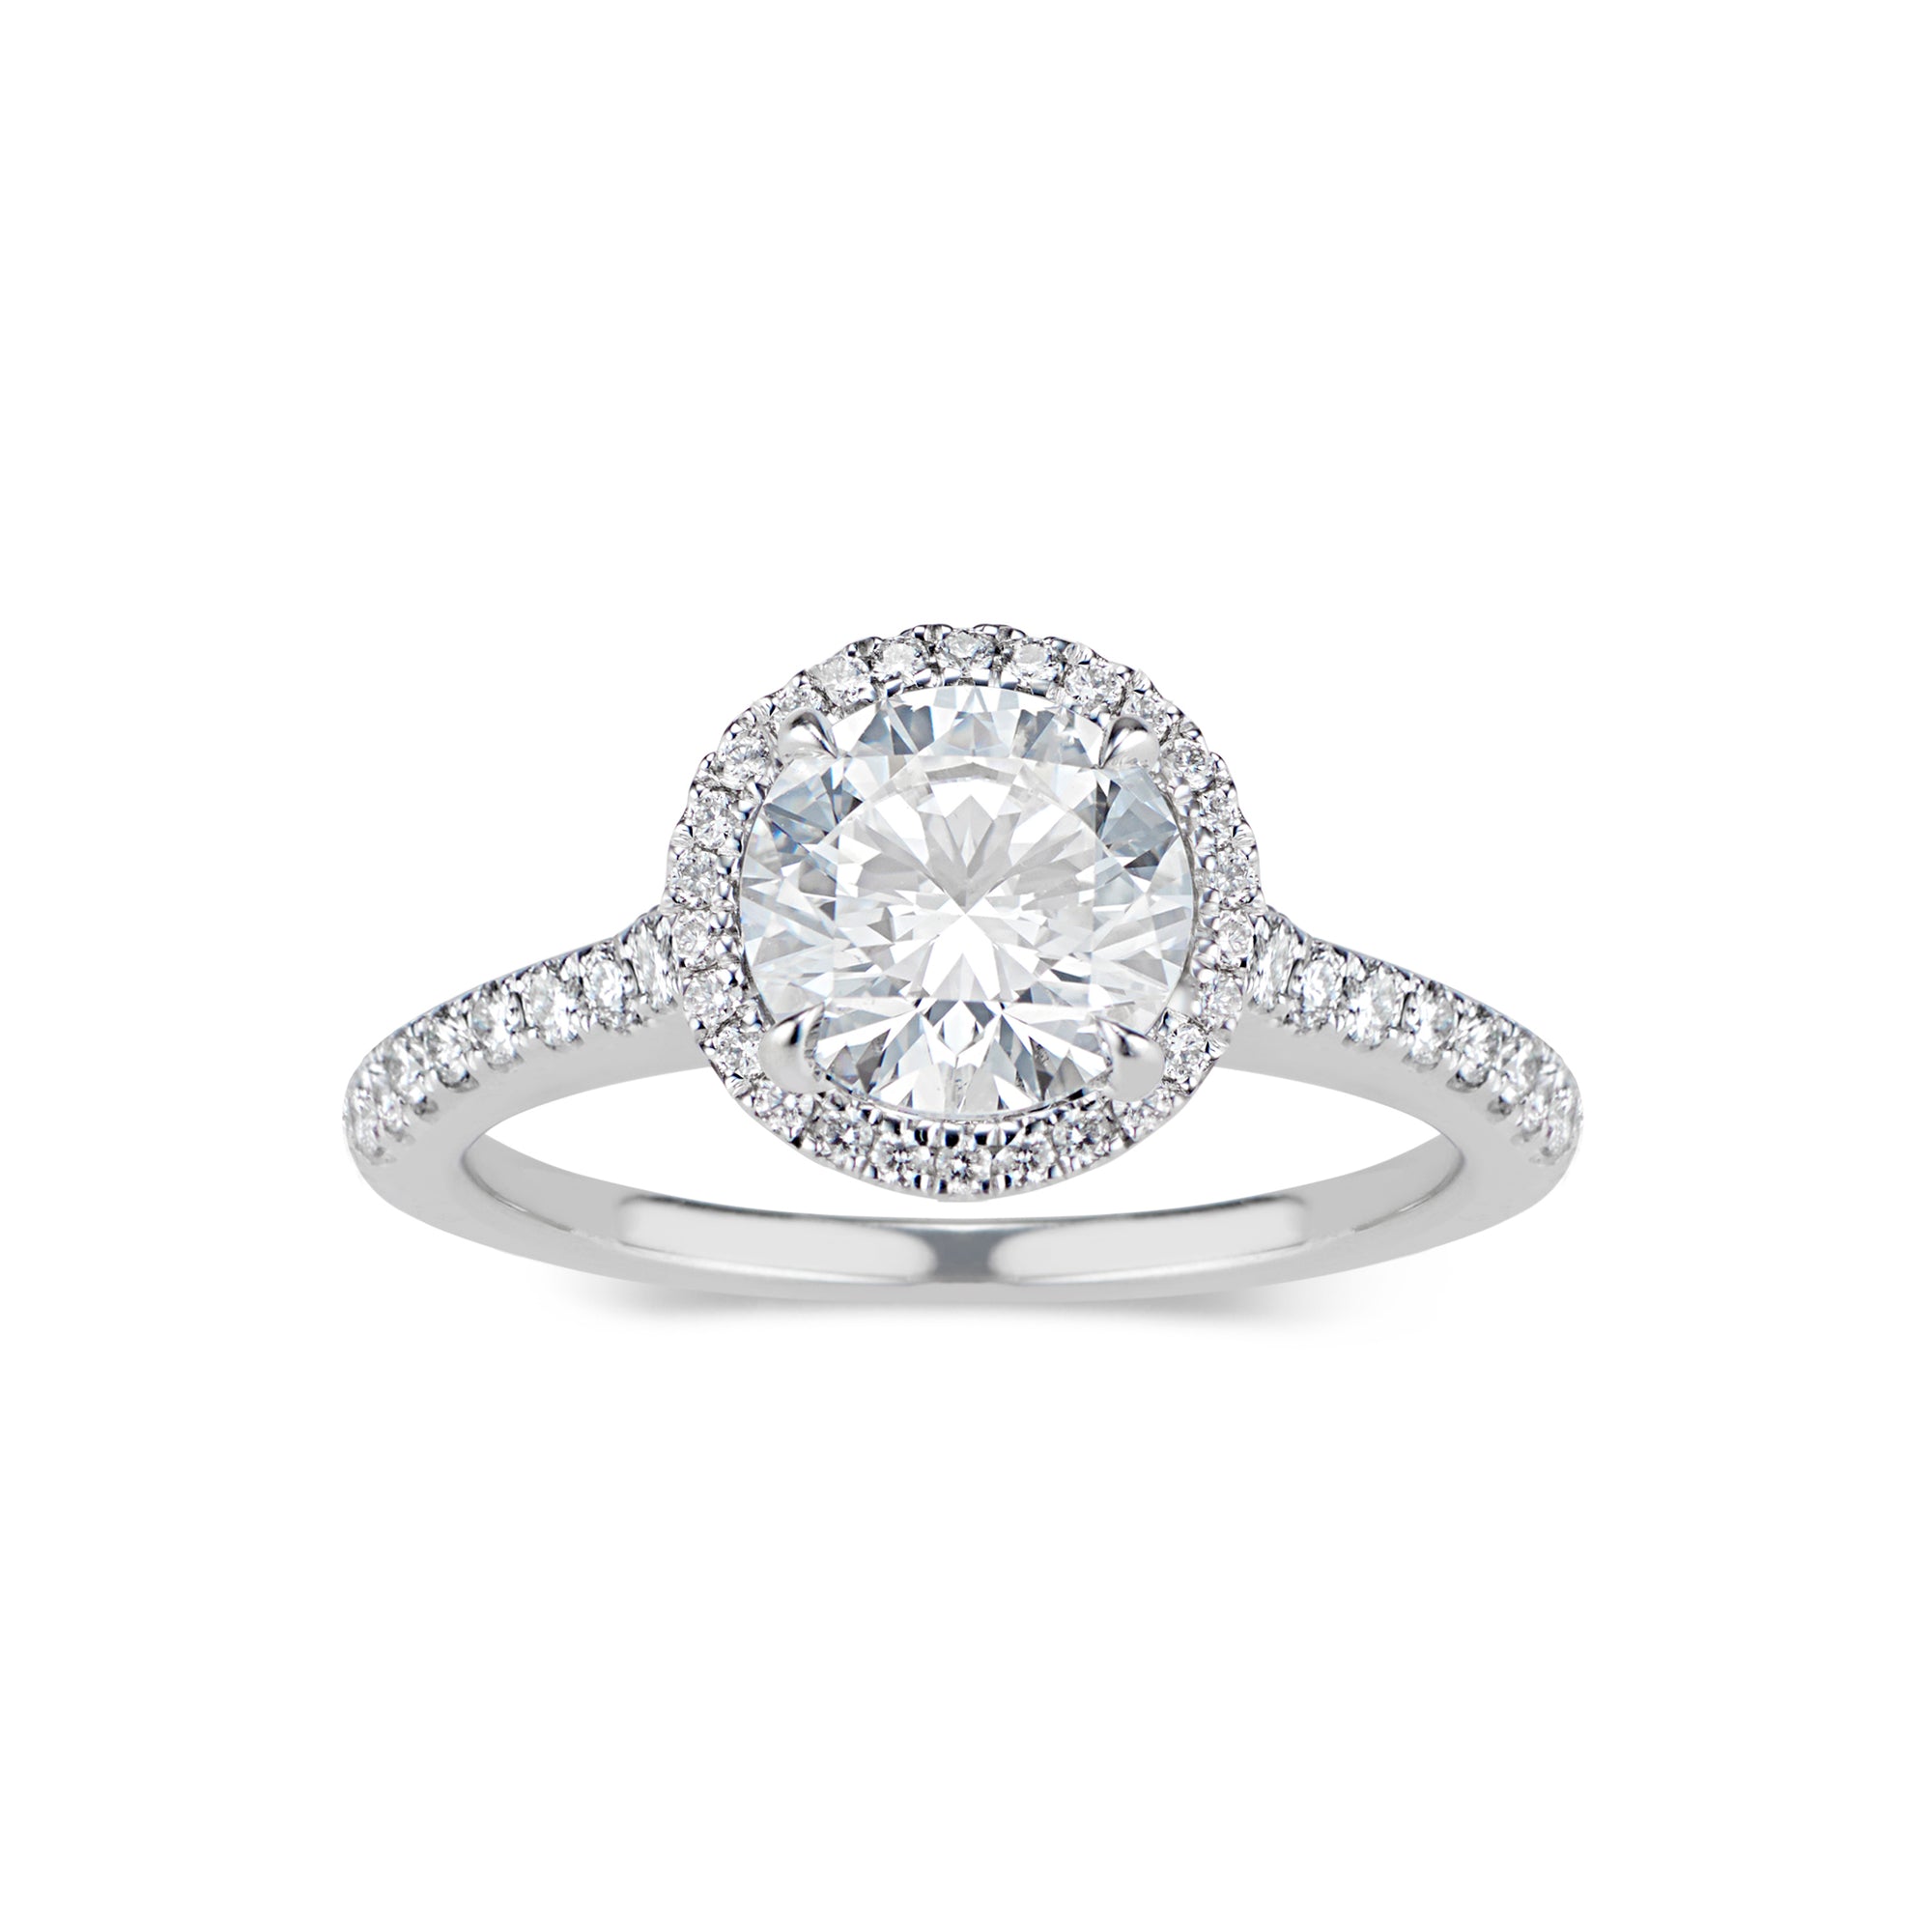 Round Halo Diamond Engagement Ring with Diamond-Set Gallery  18KTW-4.19GR,  66 Round -.40 CT